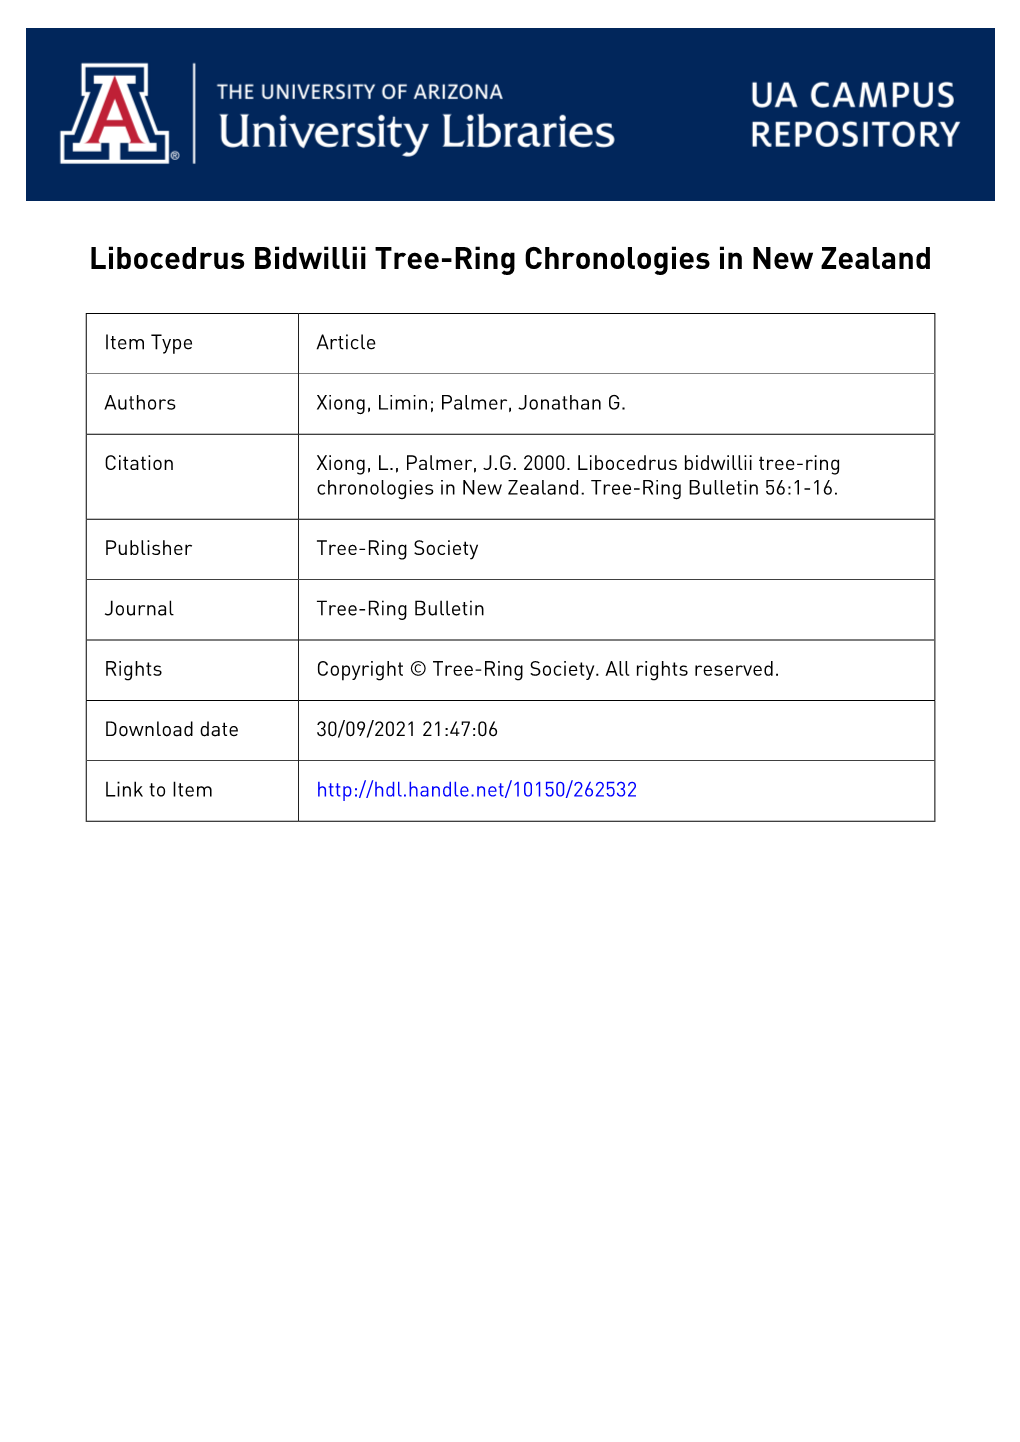 Libocedrus Bidwillii Tree-Ring Chronologies in New Zealand